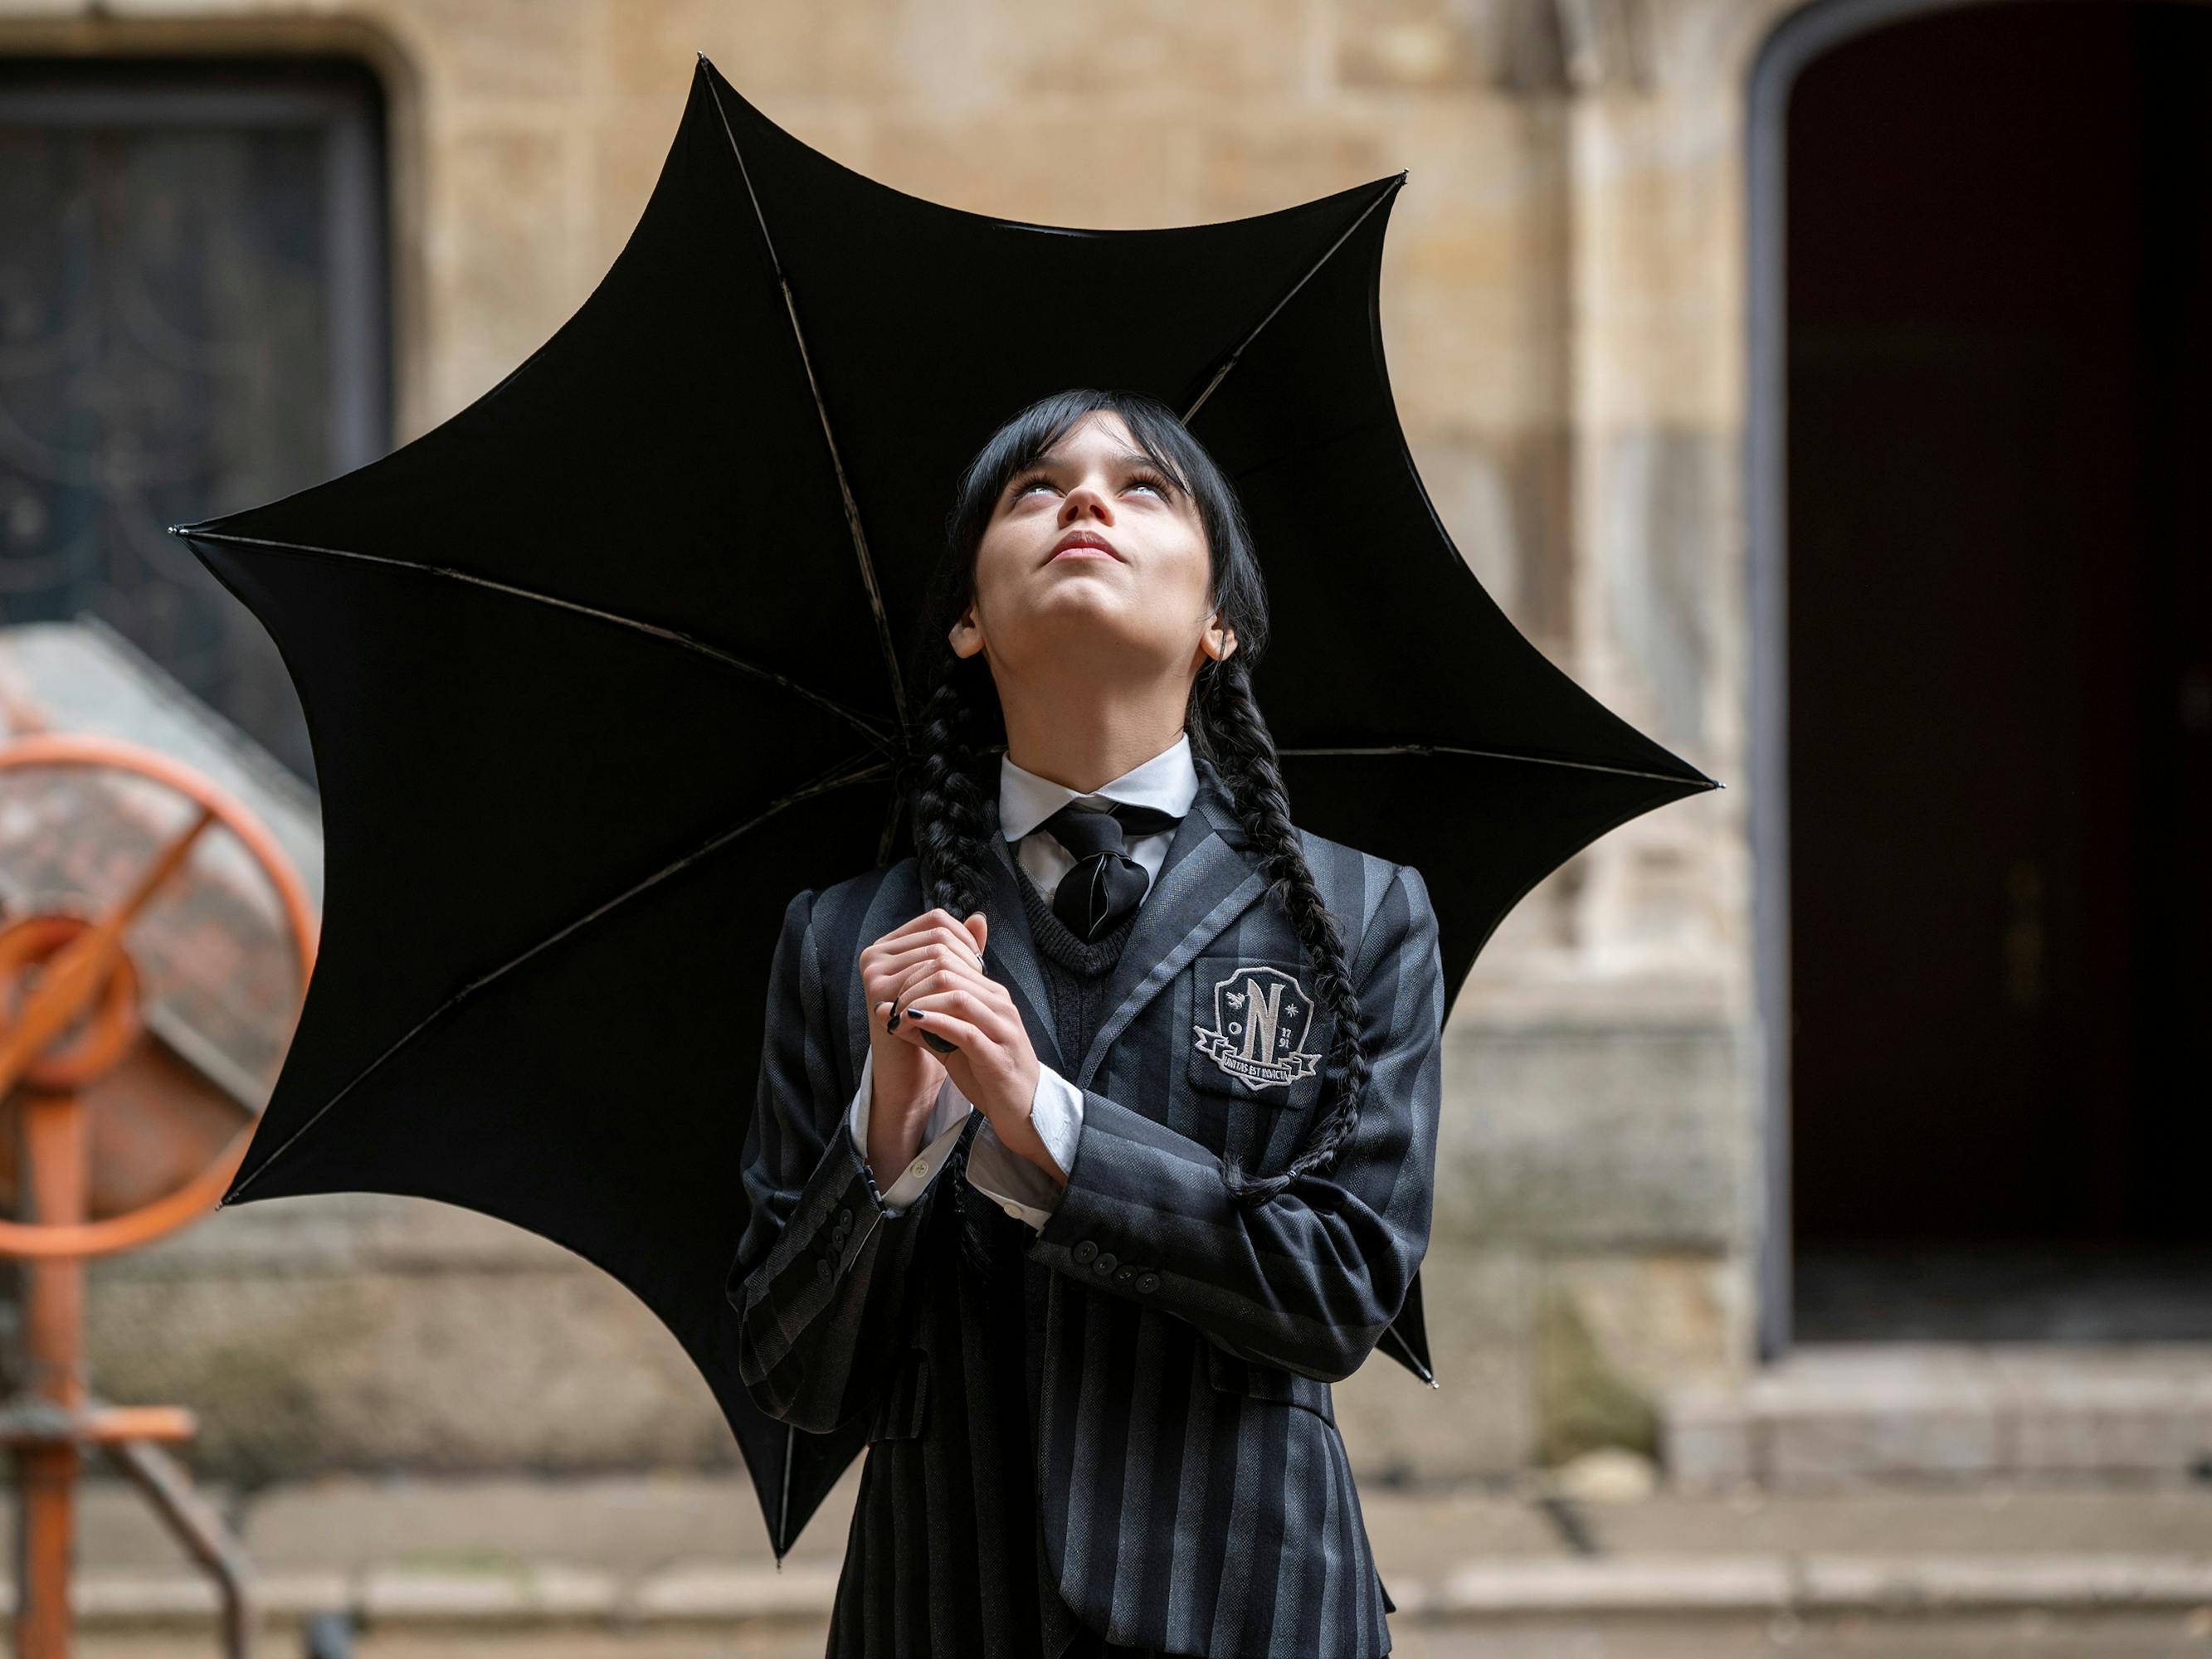 Wednesday (Jenna Ortega) wears all black and holds an umbrella.